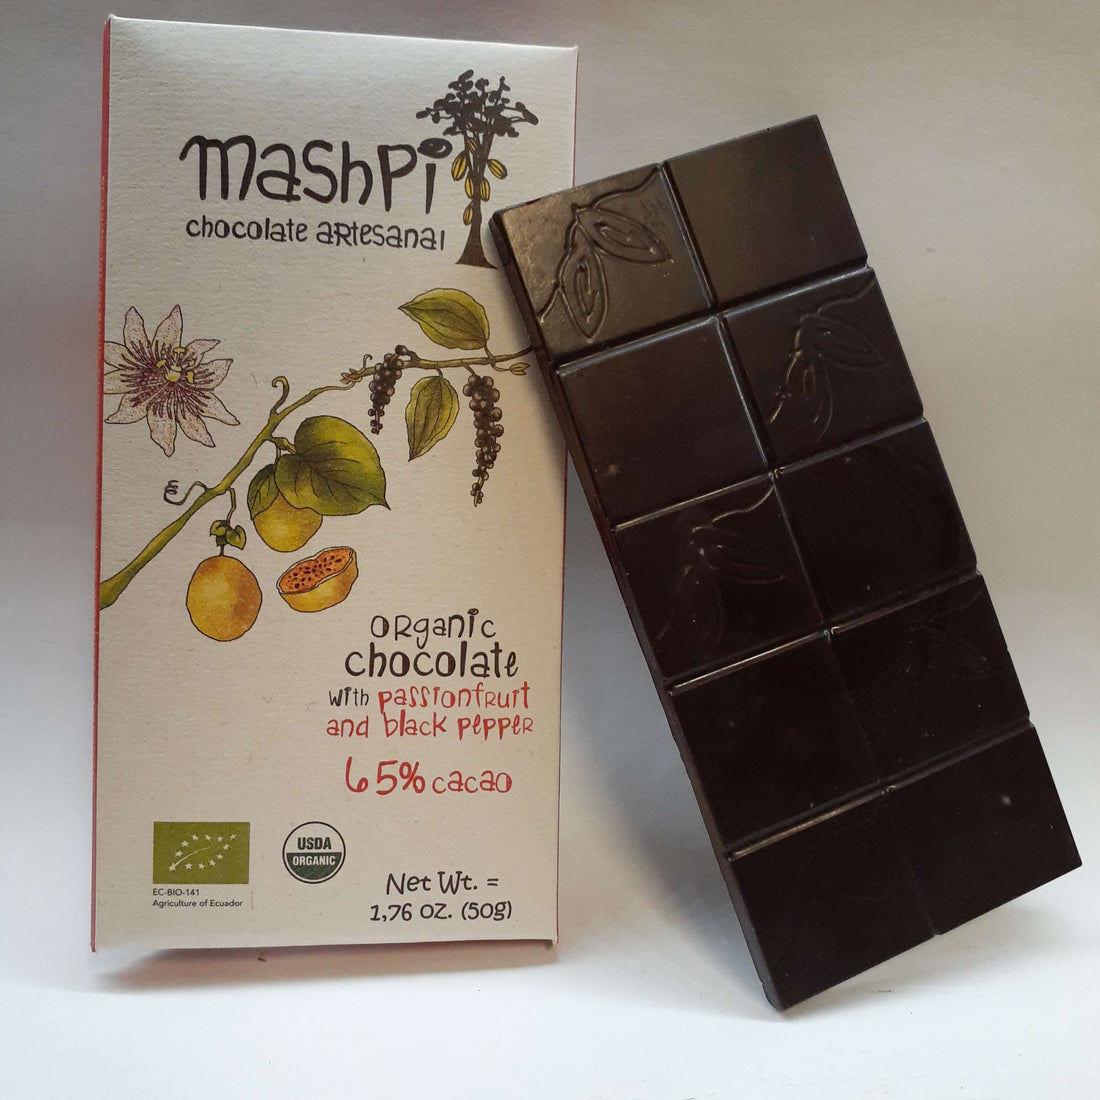 Passionfruit &amp; Pepper chocolate bar - Mashpi Chocolate 